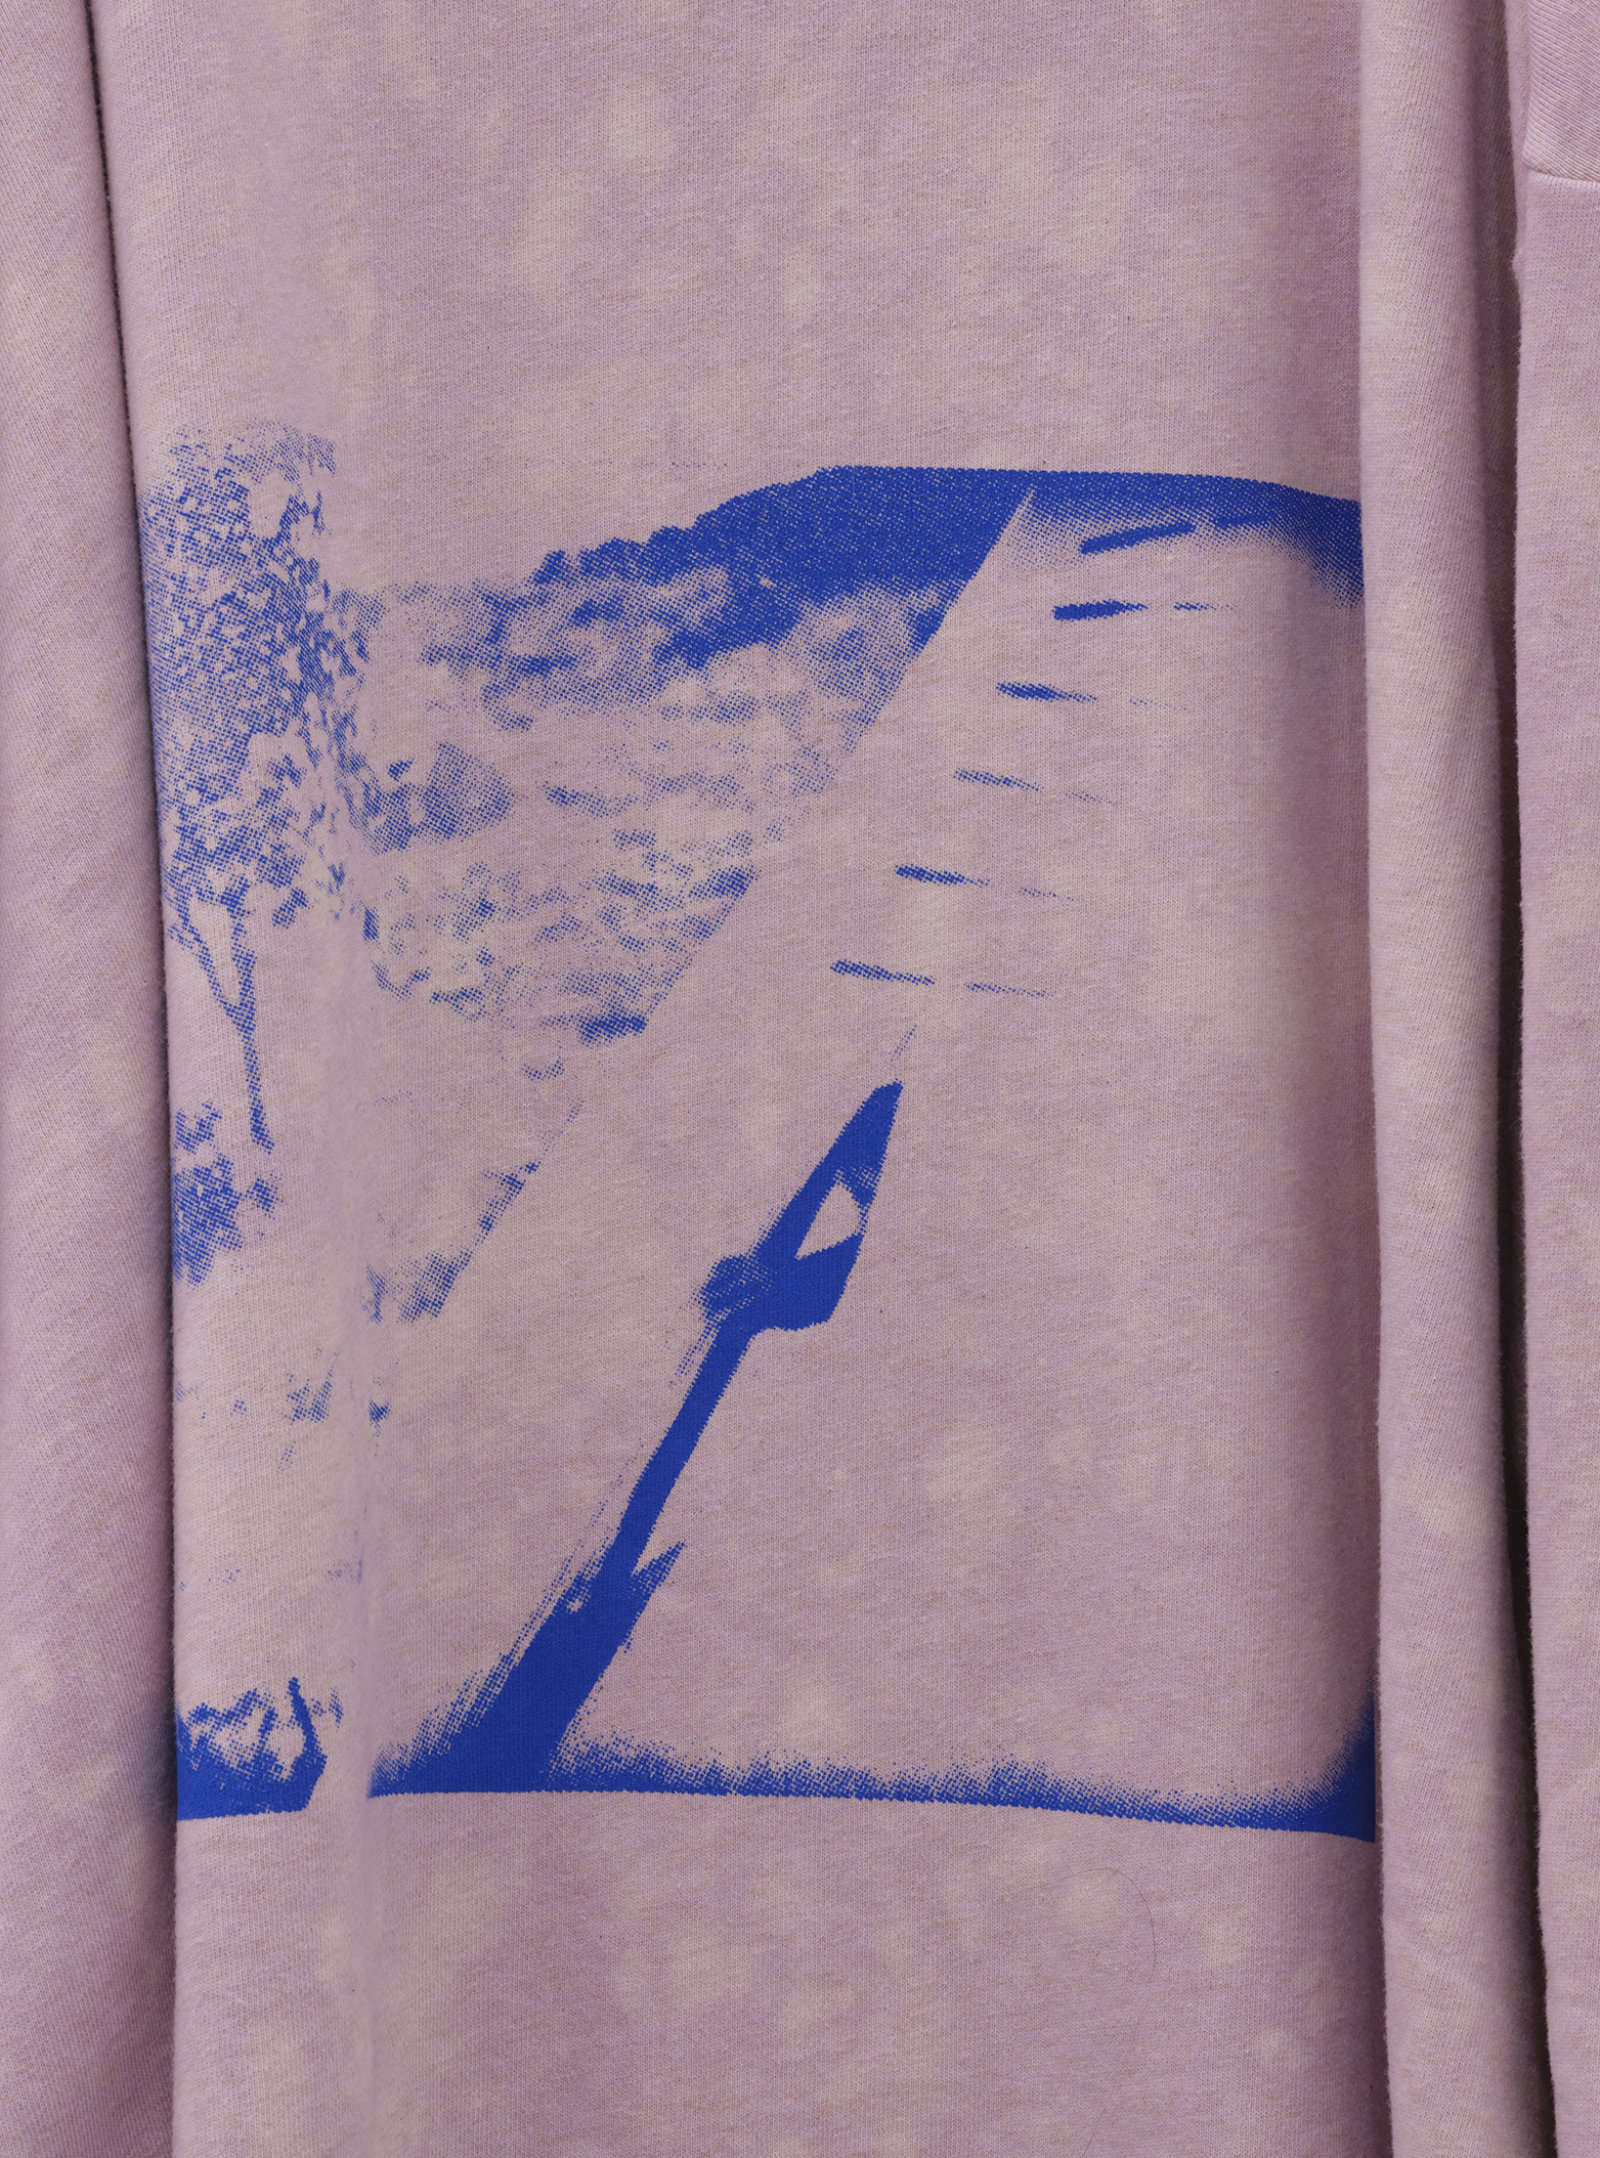 Duane Linklater, whiteeagle (detail), 2020, handmade sweater, cochineal dye, silkscreen, nails, 38 x 20 x 5 in. (97 x 51 x 13 cm)